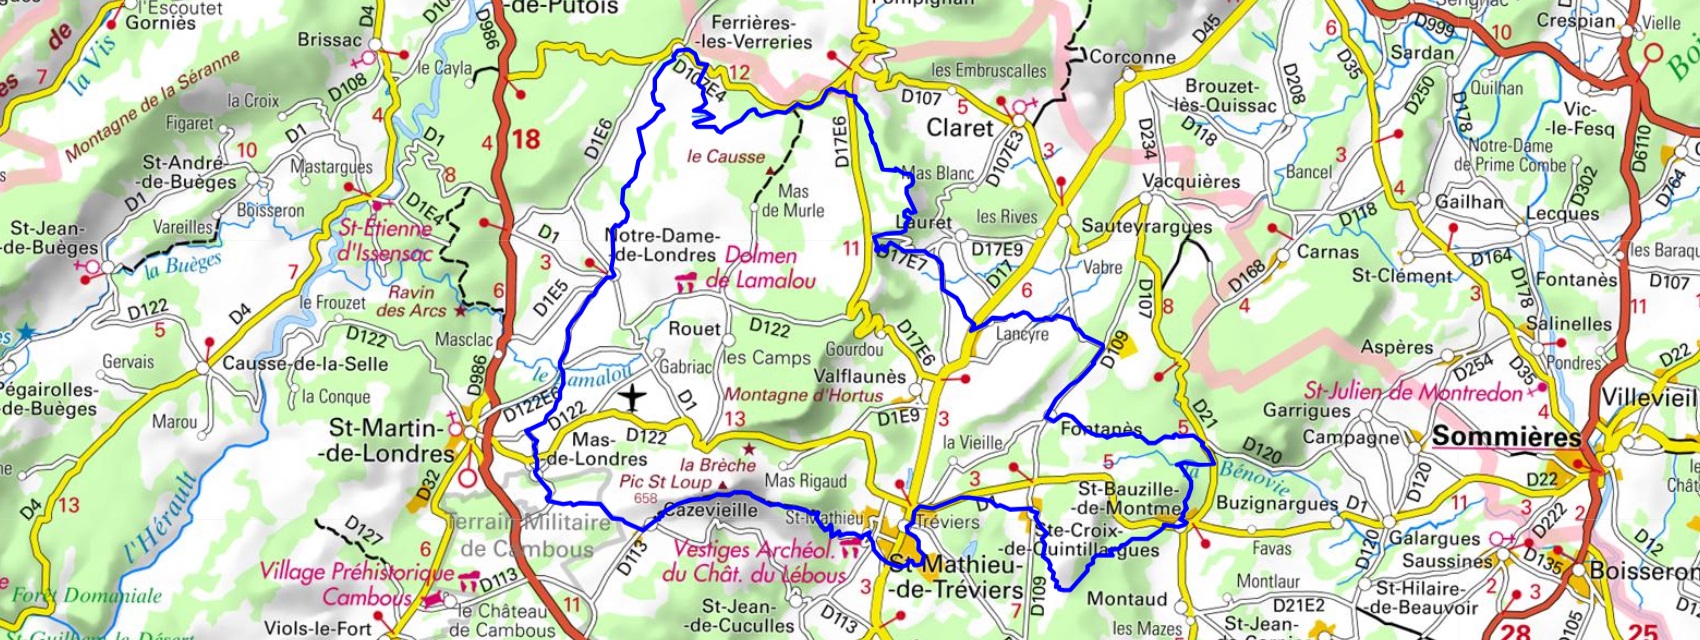 Hiking around Grand Pic Saint-Loup from Vinyards to Causses (Herault) 1